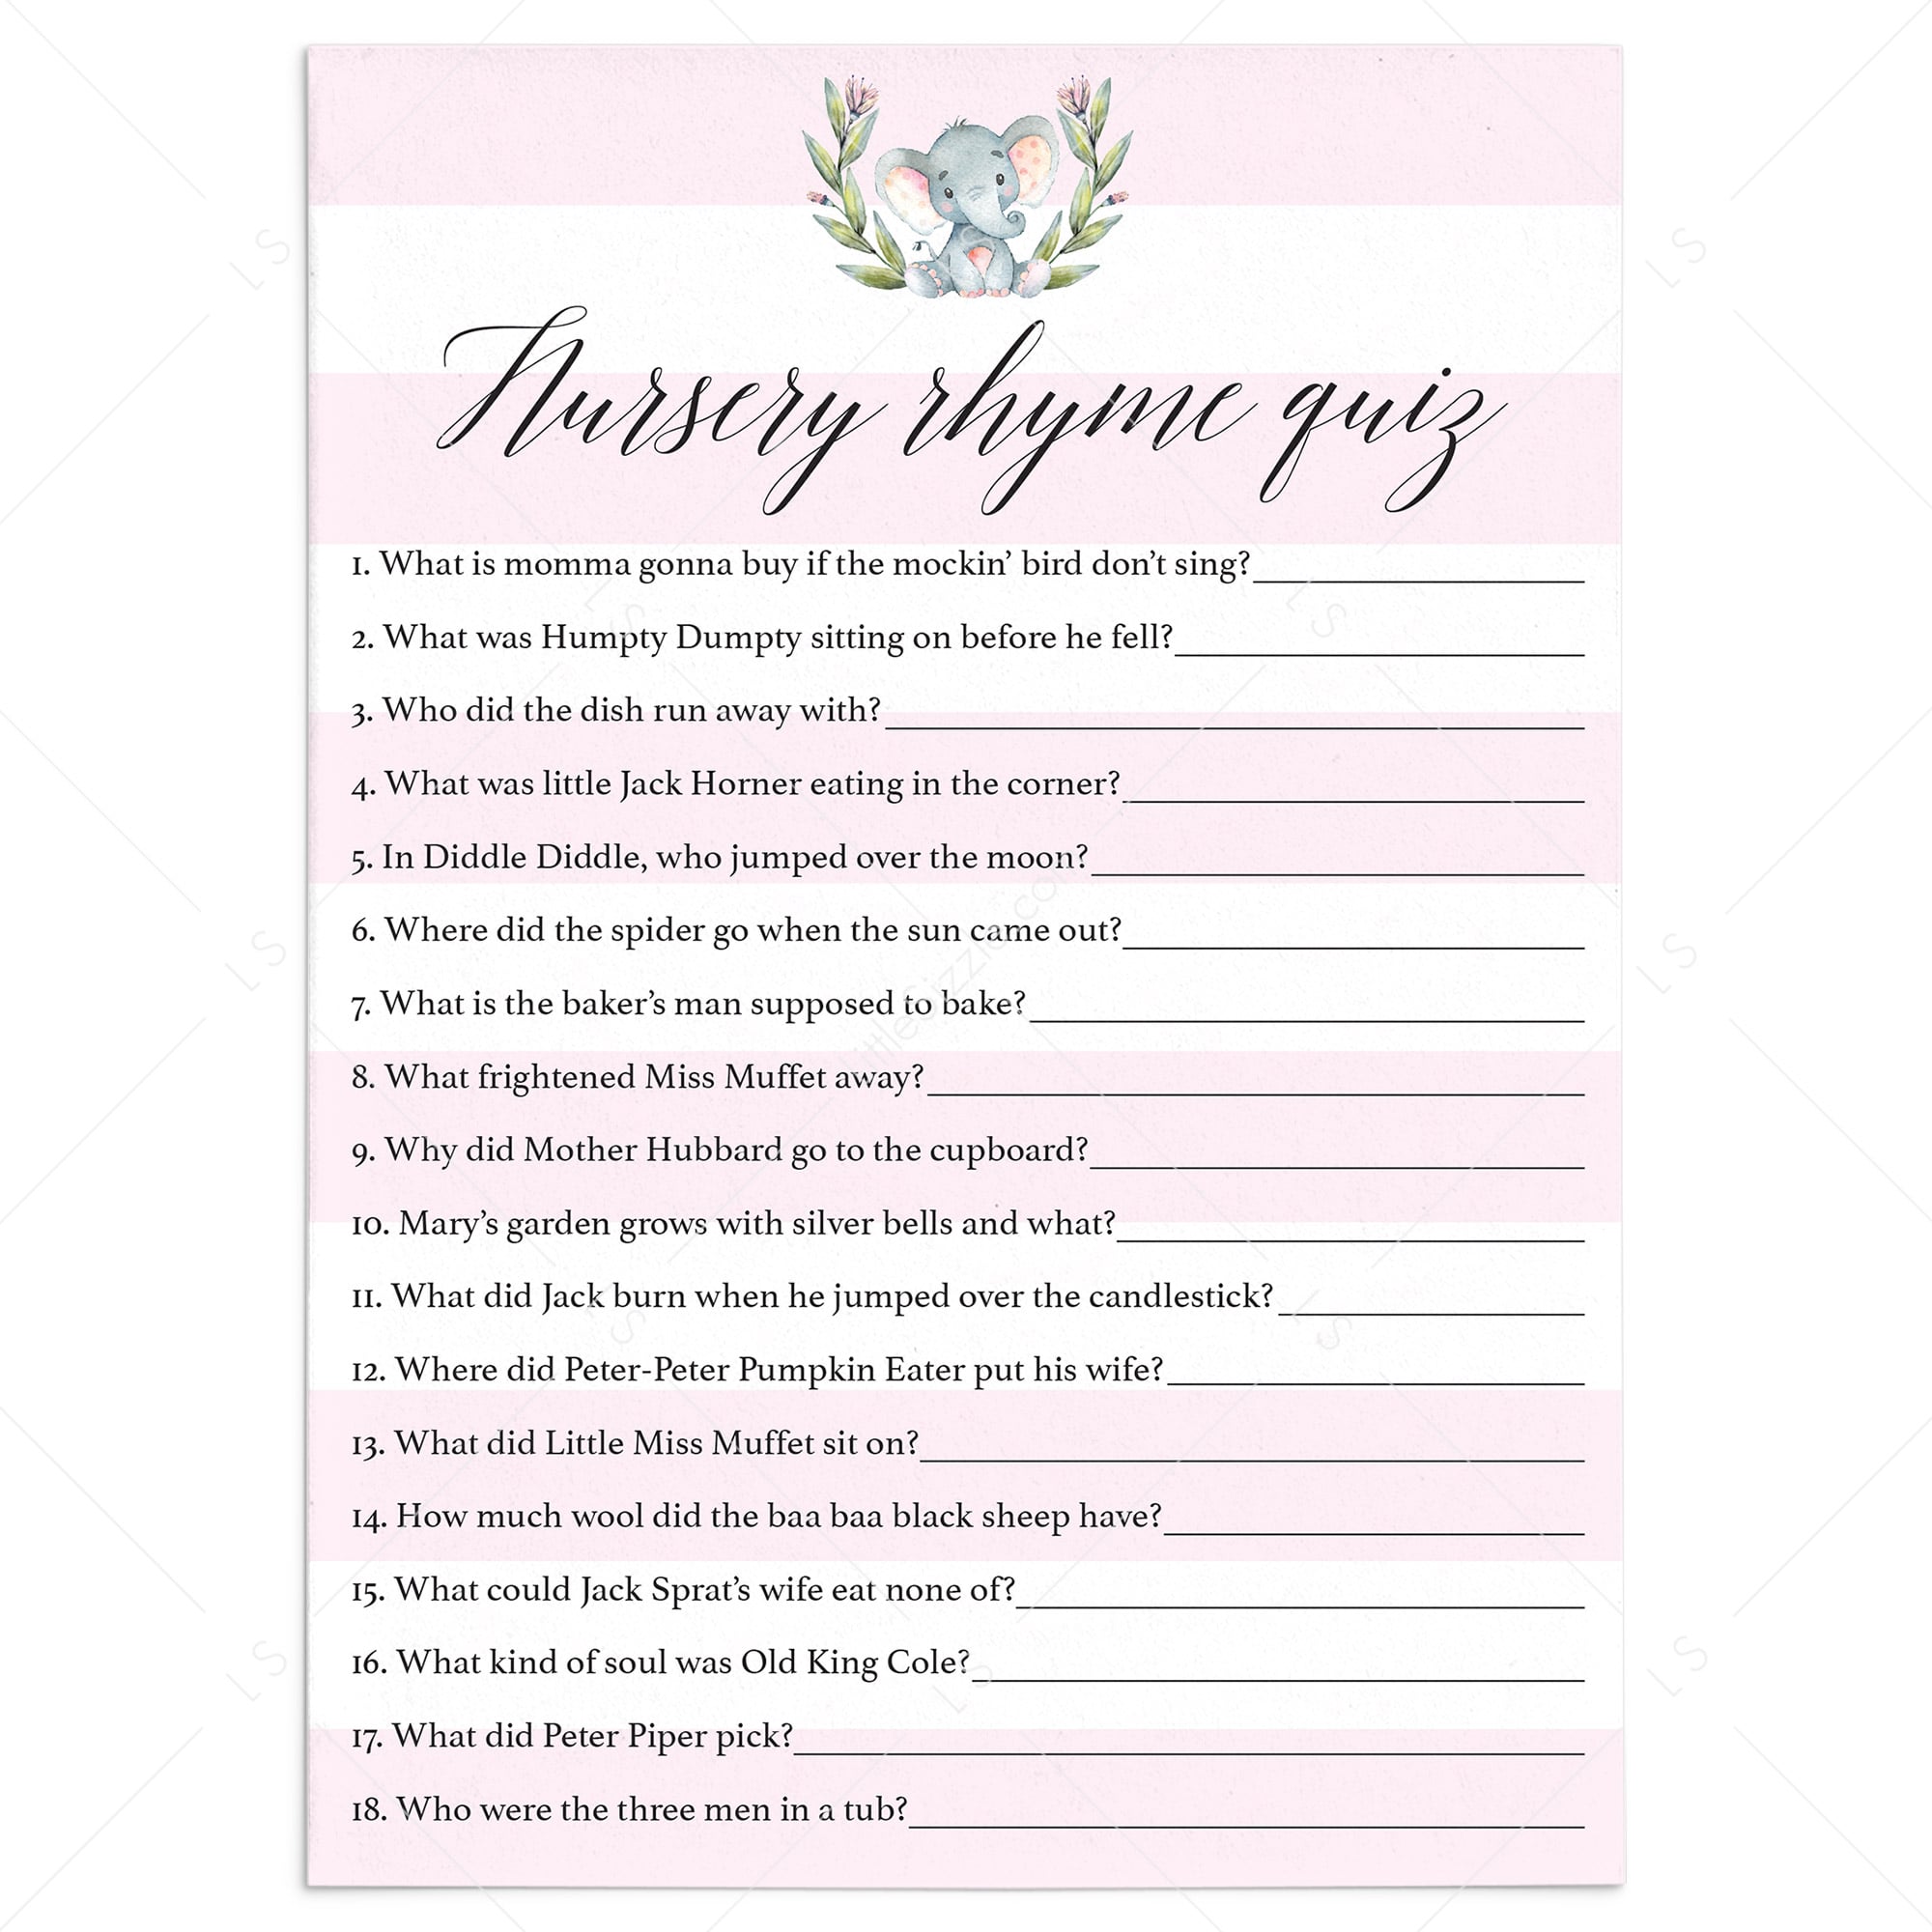 Nursery rhyme quiz answer printable by LittleSizzle